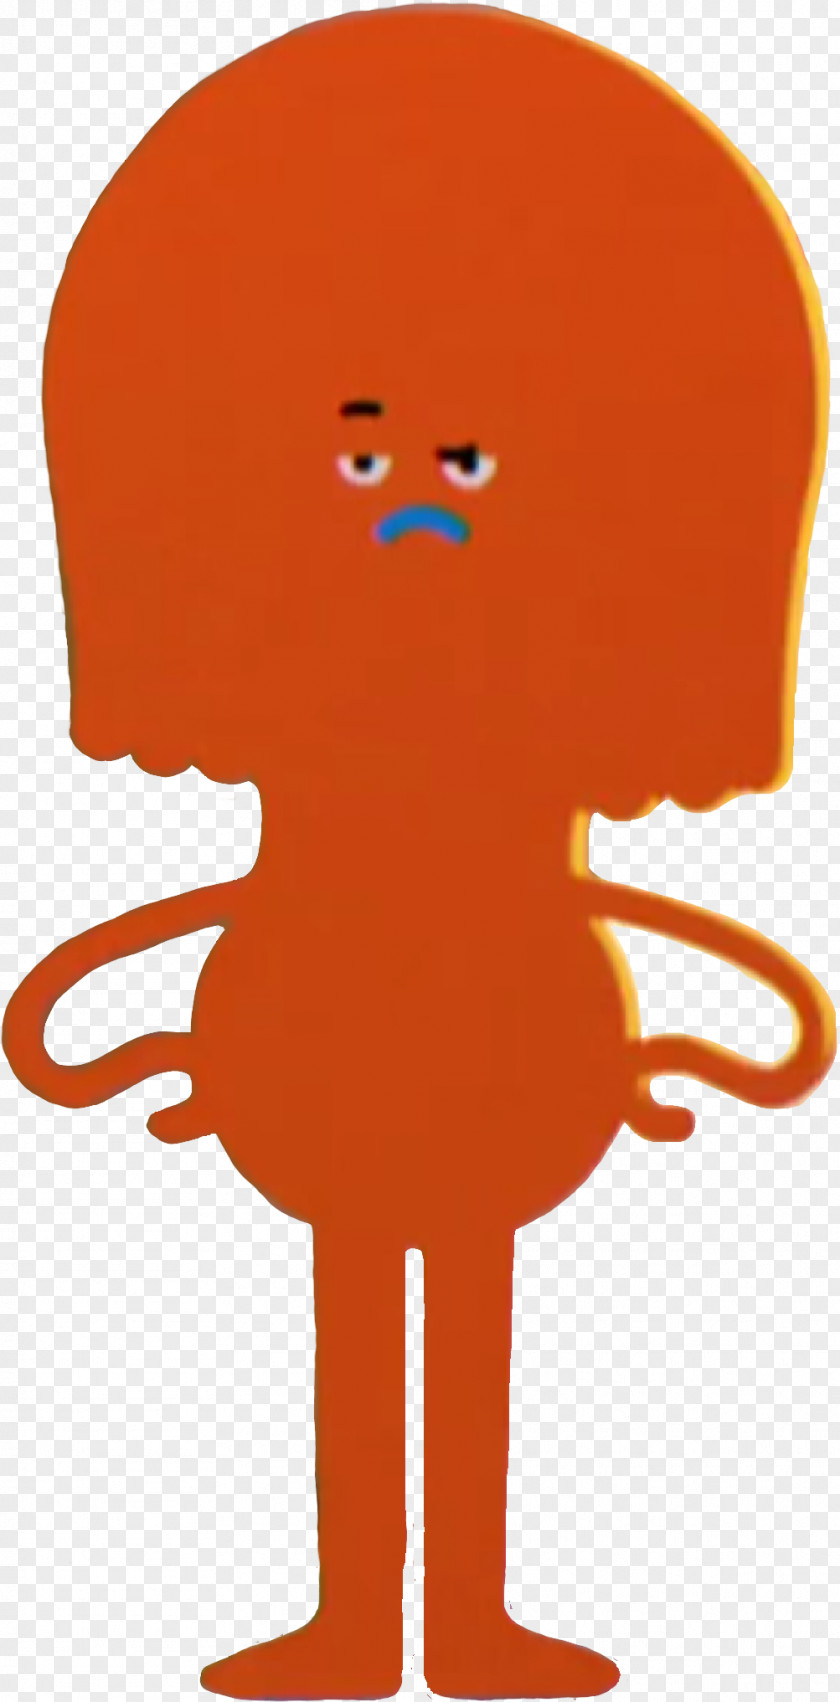 Orange Cartoon Network Background PNG